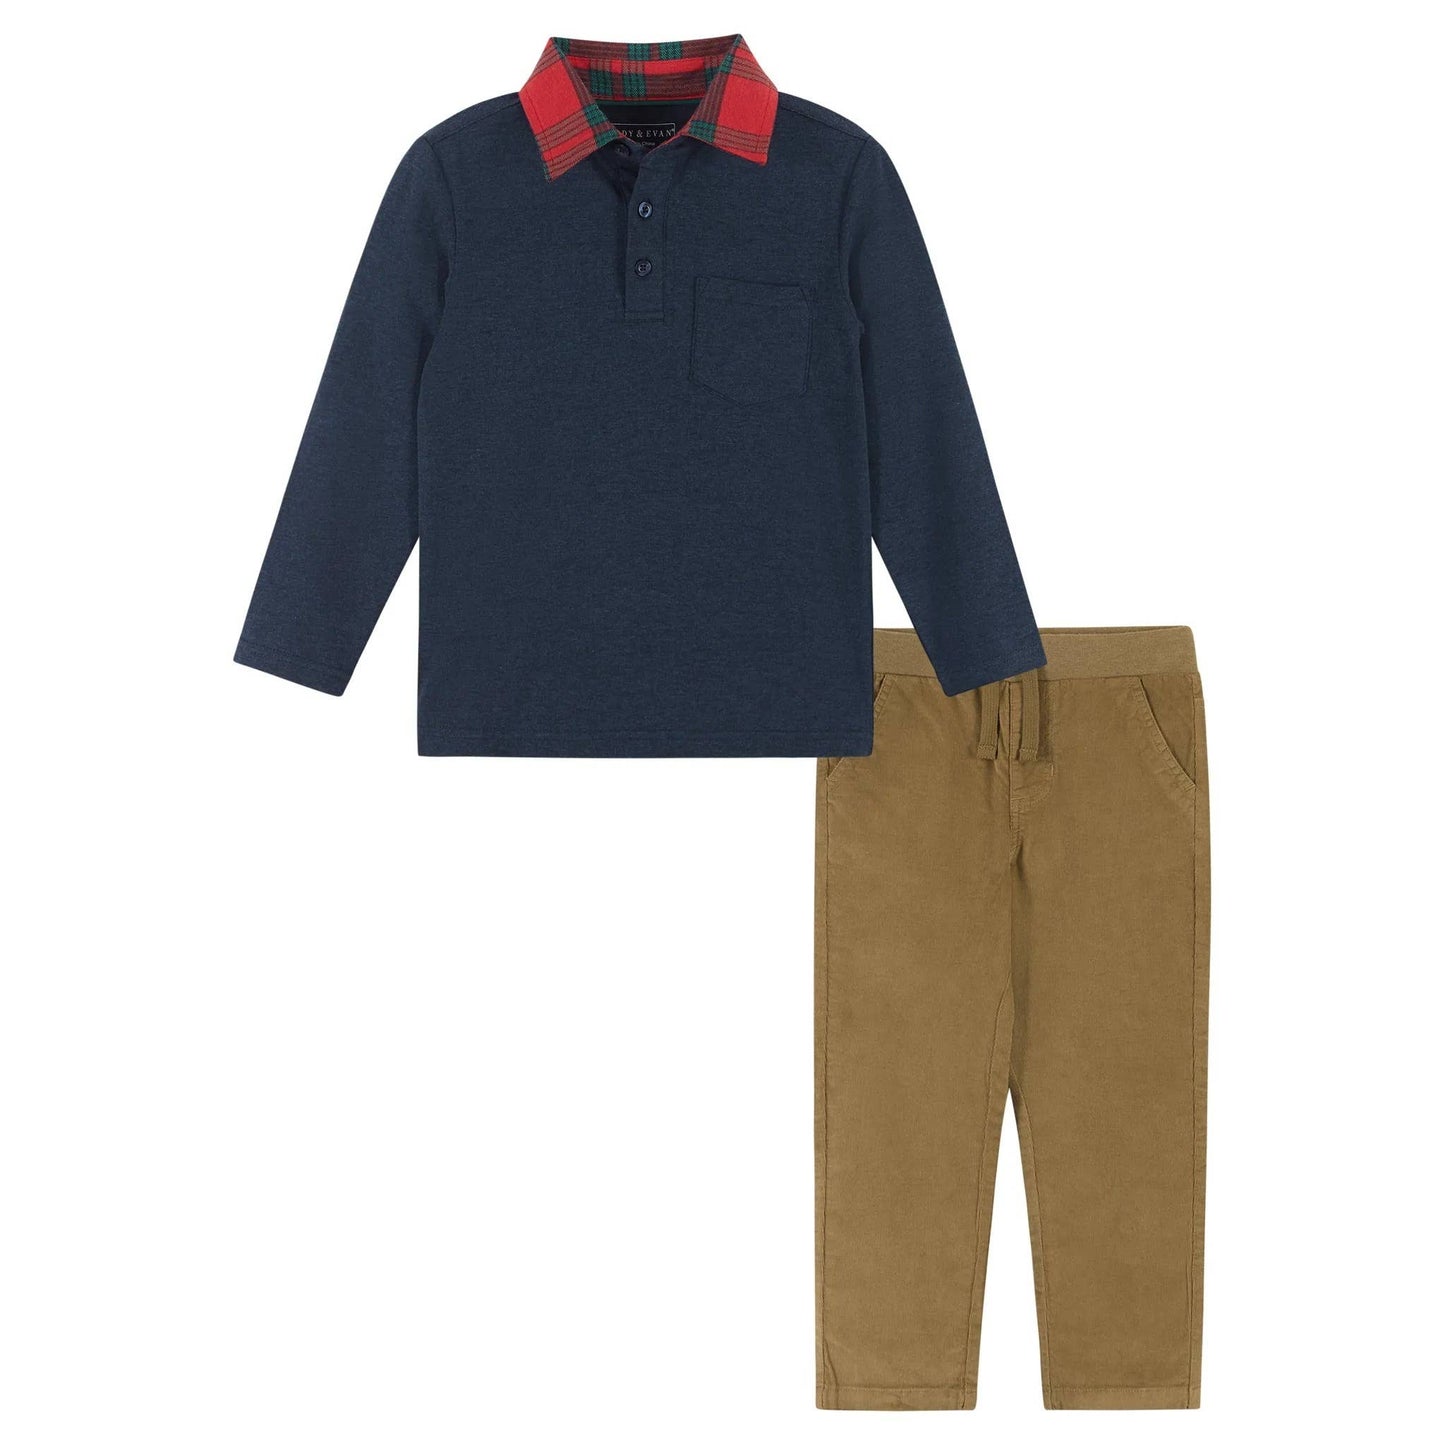 Andy & Evan infant & boys holiday pocket tee & corduroy pants set